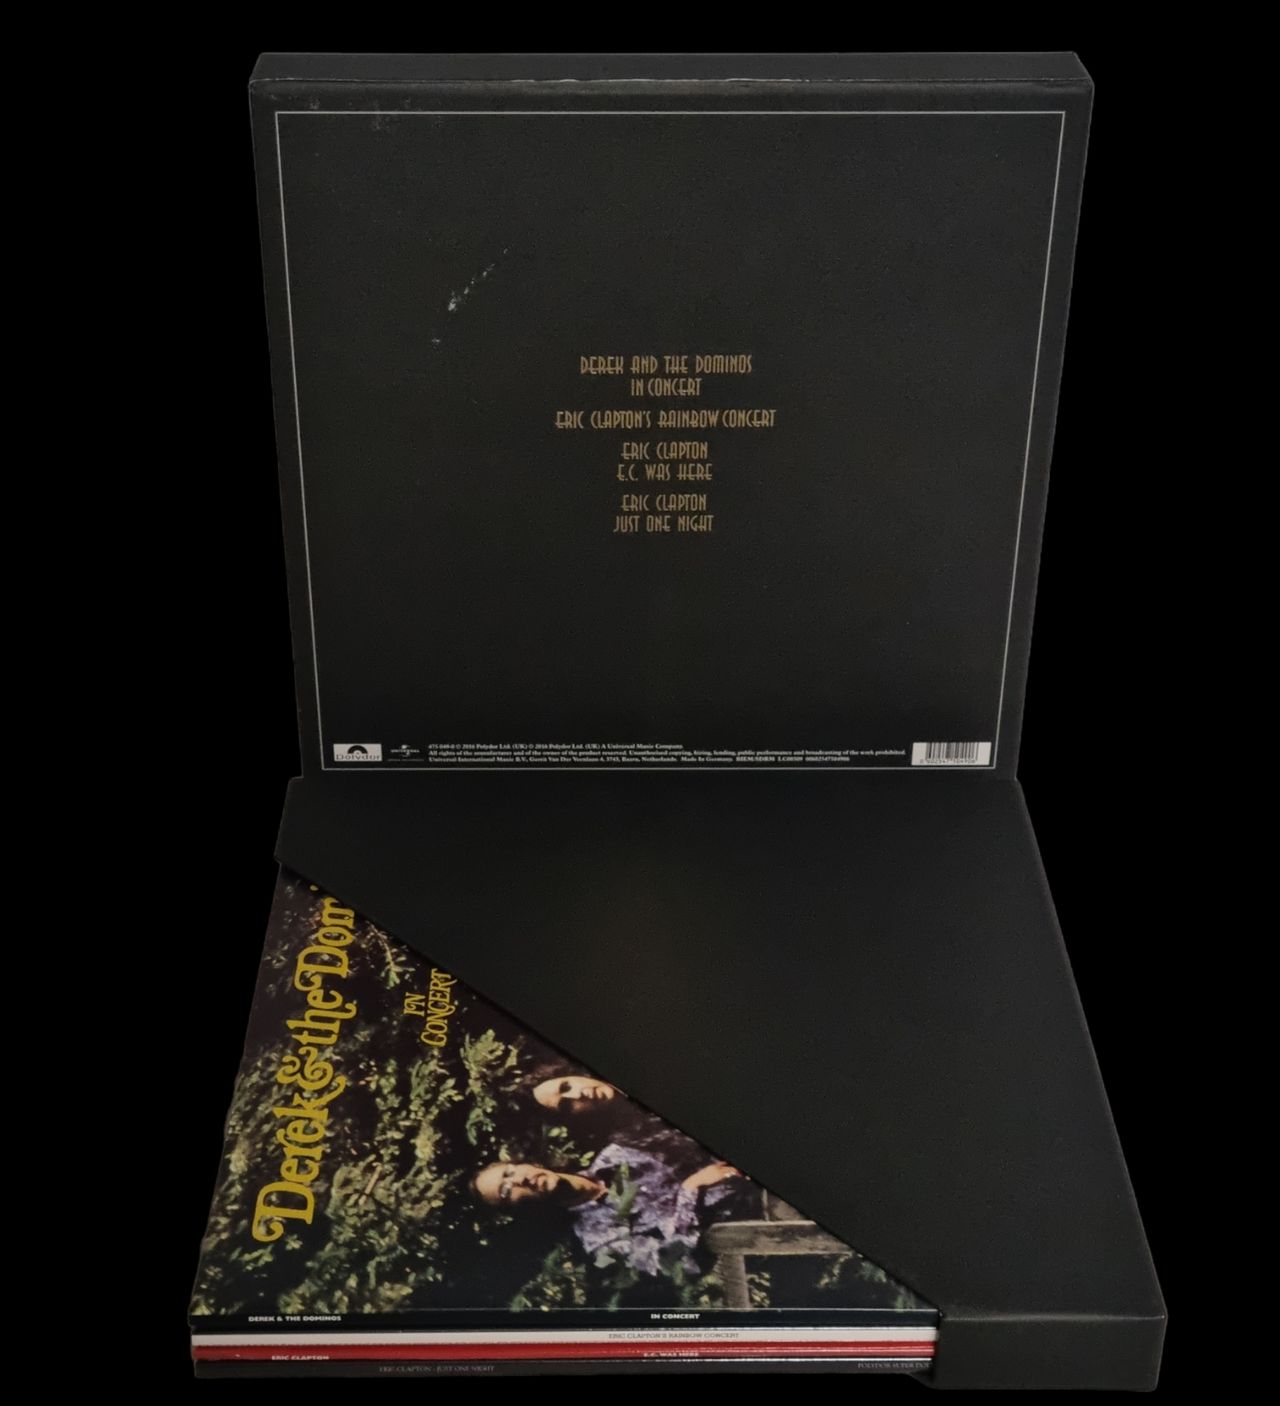 Eric Clapton The Live Album Collection 1970-1980 UK Vinyl box — RareVinyl.com